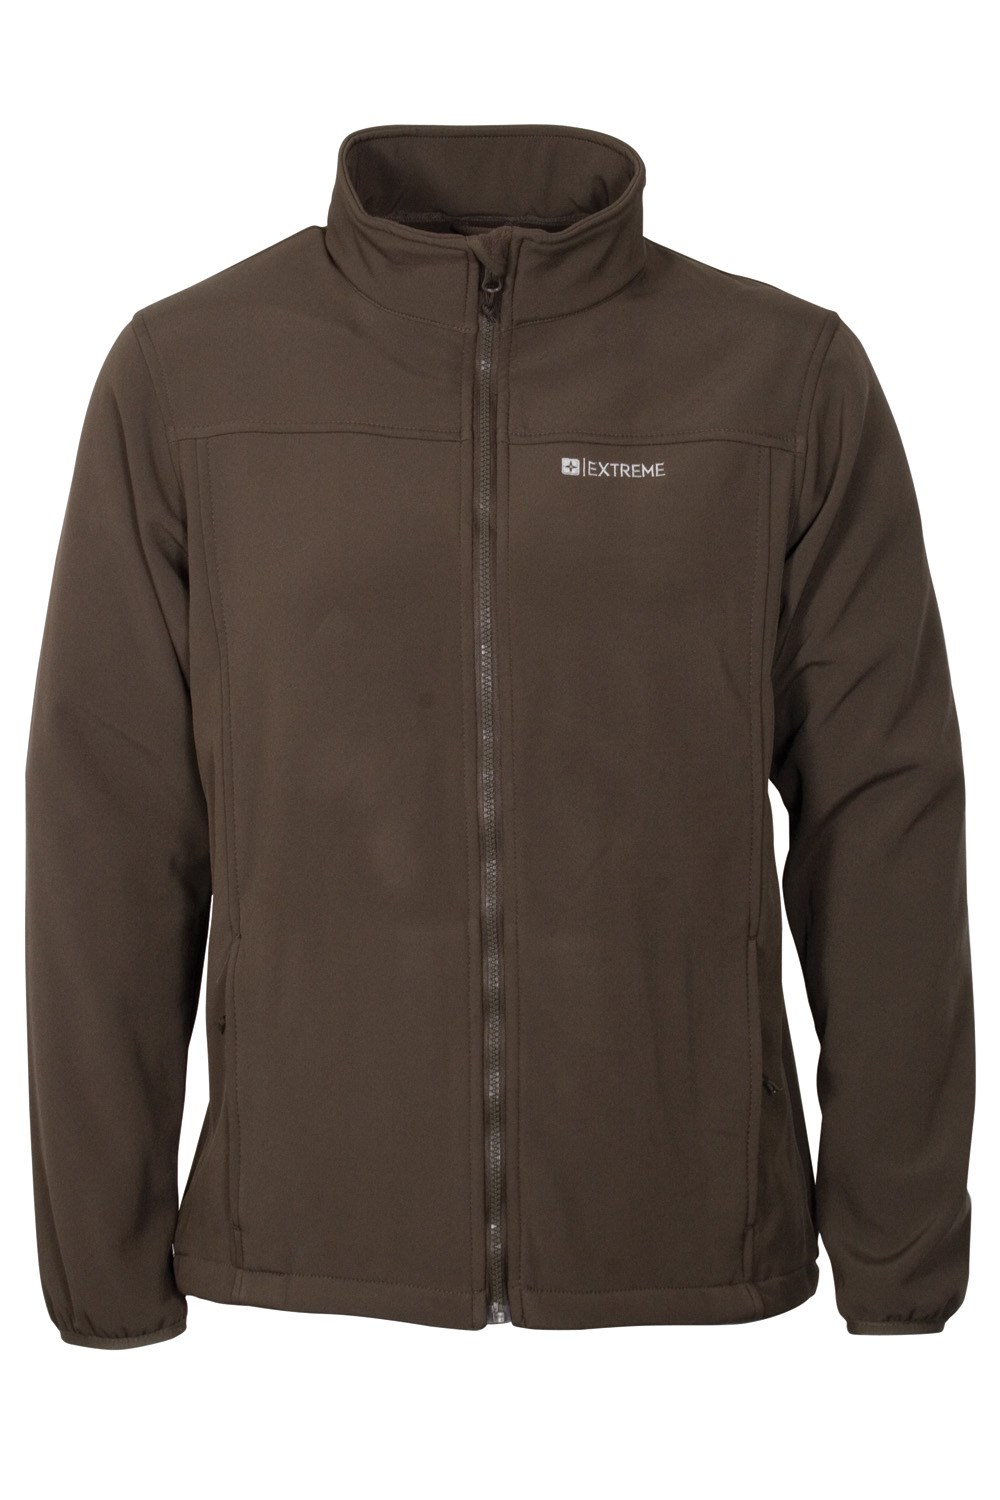 Bracken Extreme 3 in 1 Mens Waterproof Jacket | Mountain Warehouse US